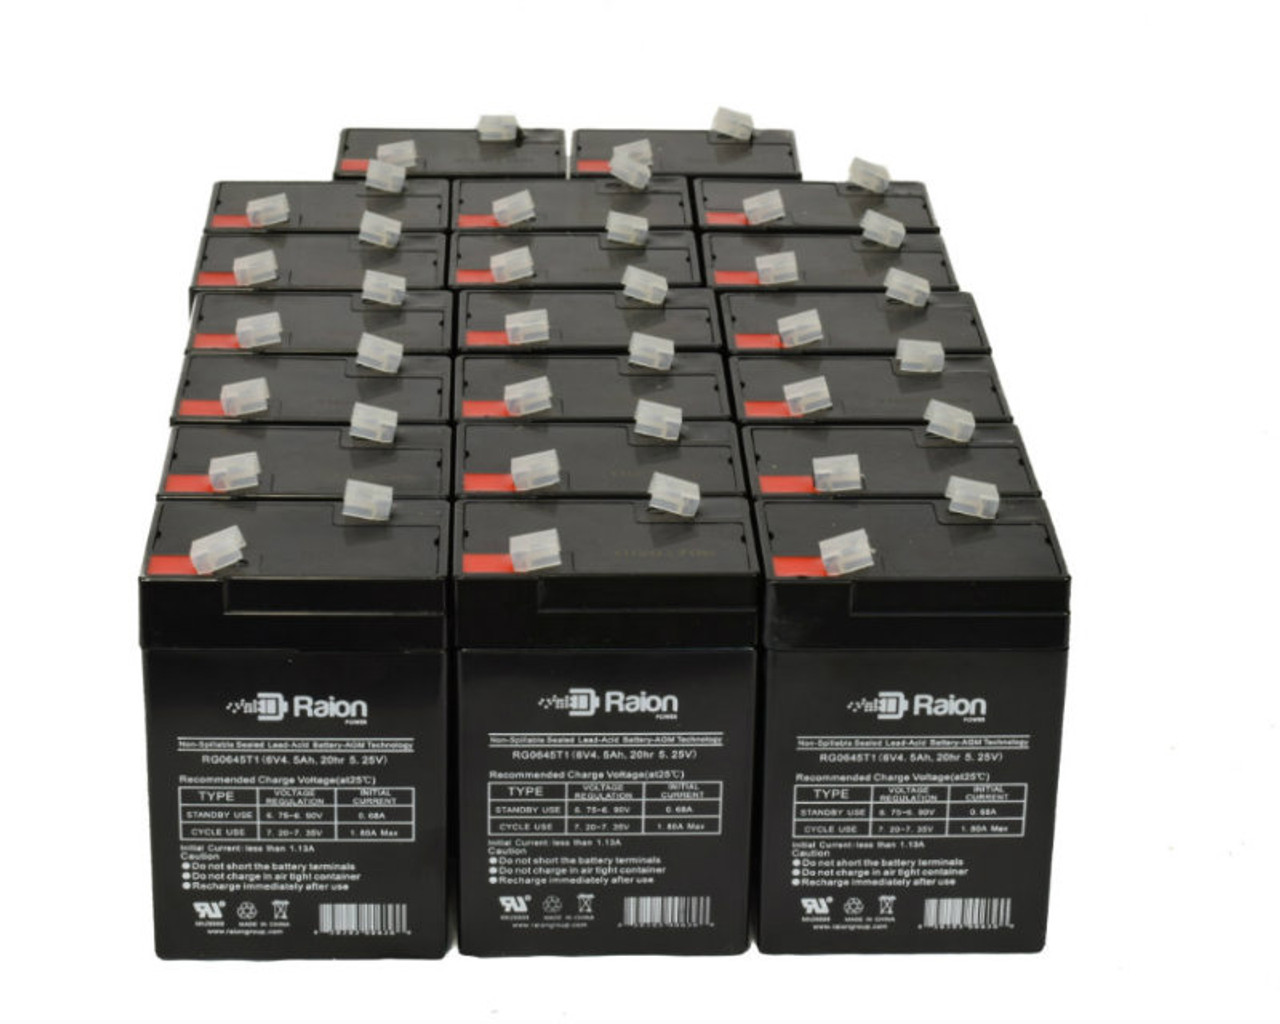 Raion Power 6 Volt 4.5Ah RG0645T1 Replacement Battery for GFX NP4-6 - 20 Pack